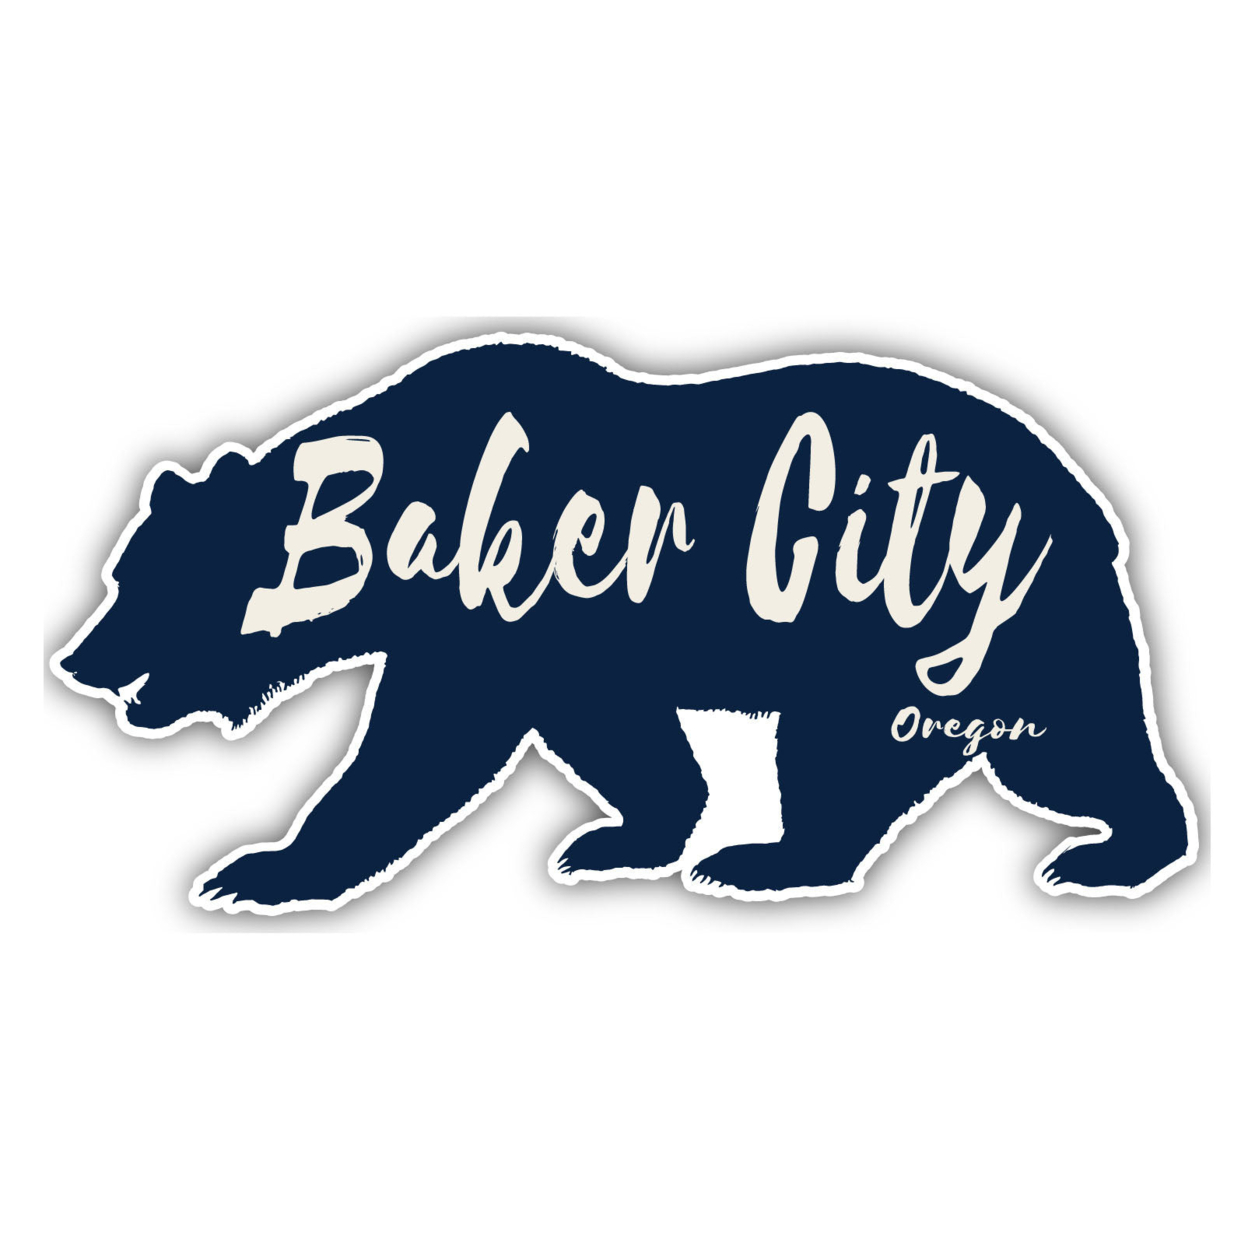 Baker City Oregon Souvenir Decorative Stickers (Choose Theme And Size) - 4-Pack, 4-Inch, Adventures Awaits